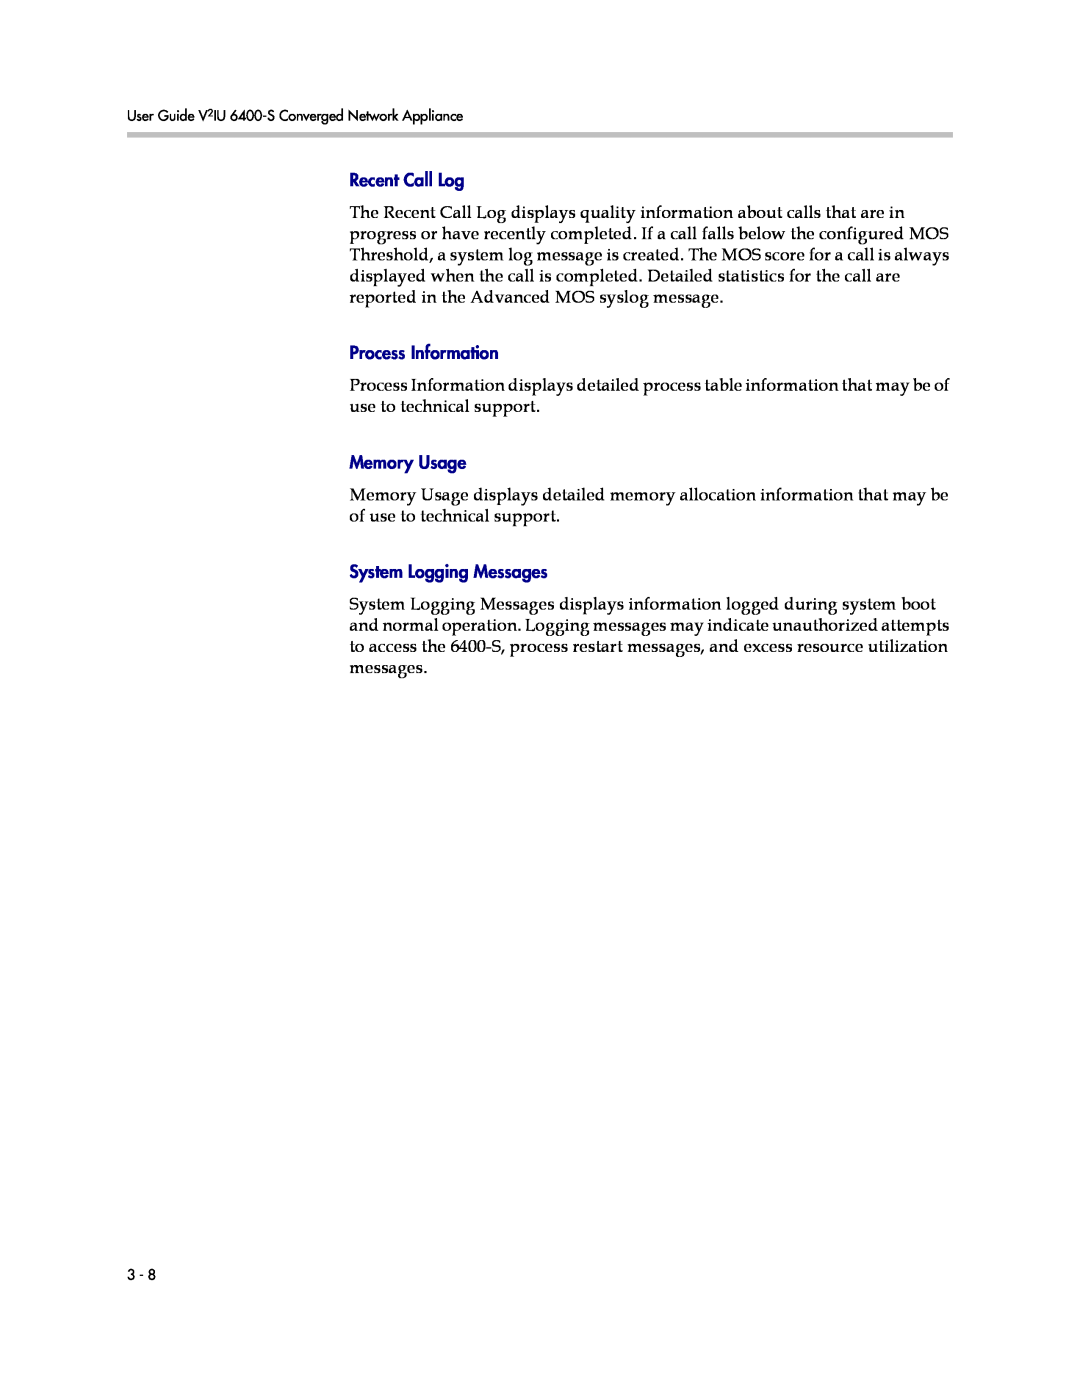 Polycom 6400-S manual Recent Call Log, Process Information, Memory Usage, System Logging Messages 